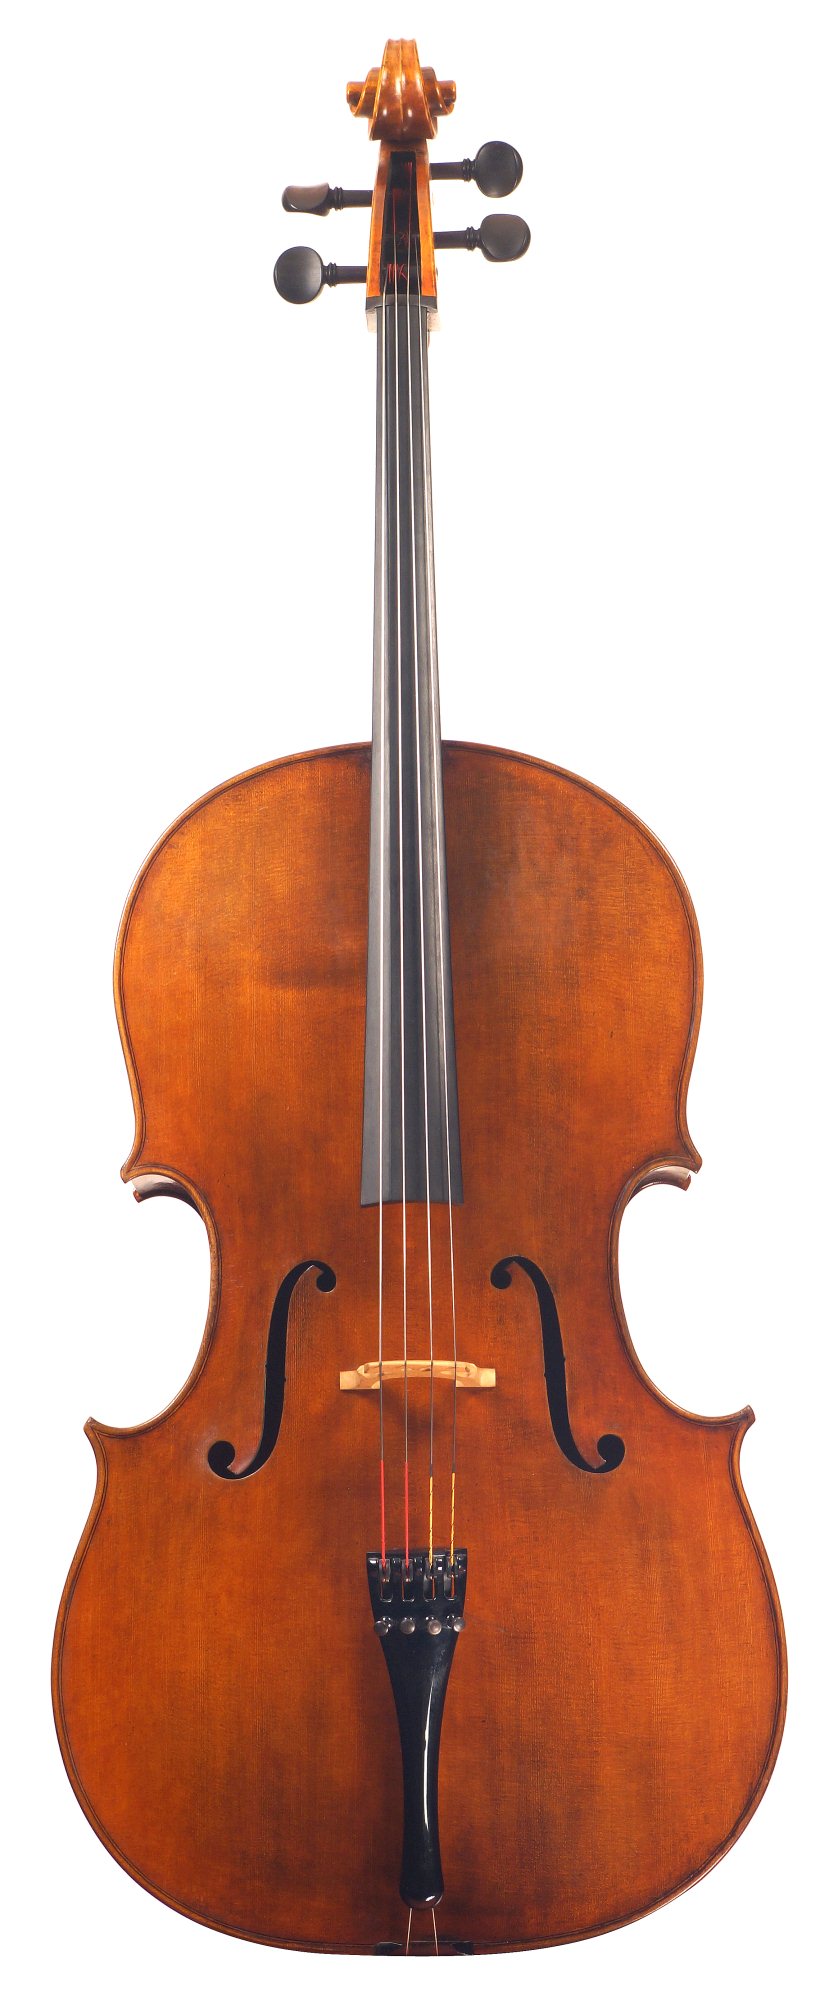 W.H. Lee Model 370 Cello – The Long Island Violin Shop